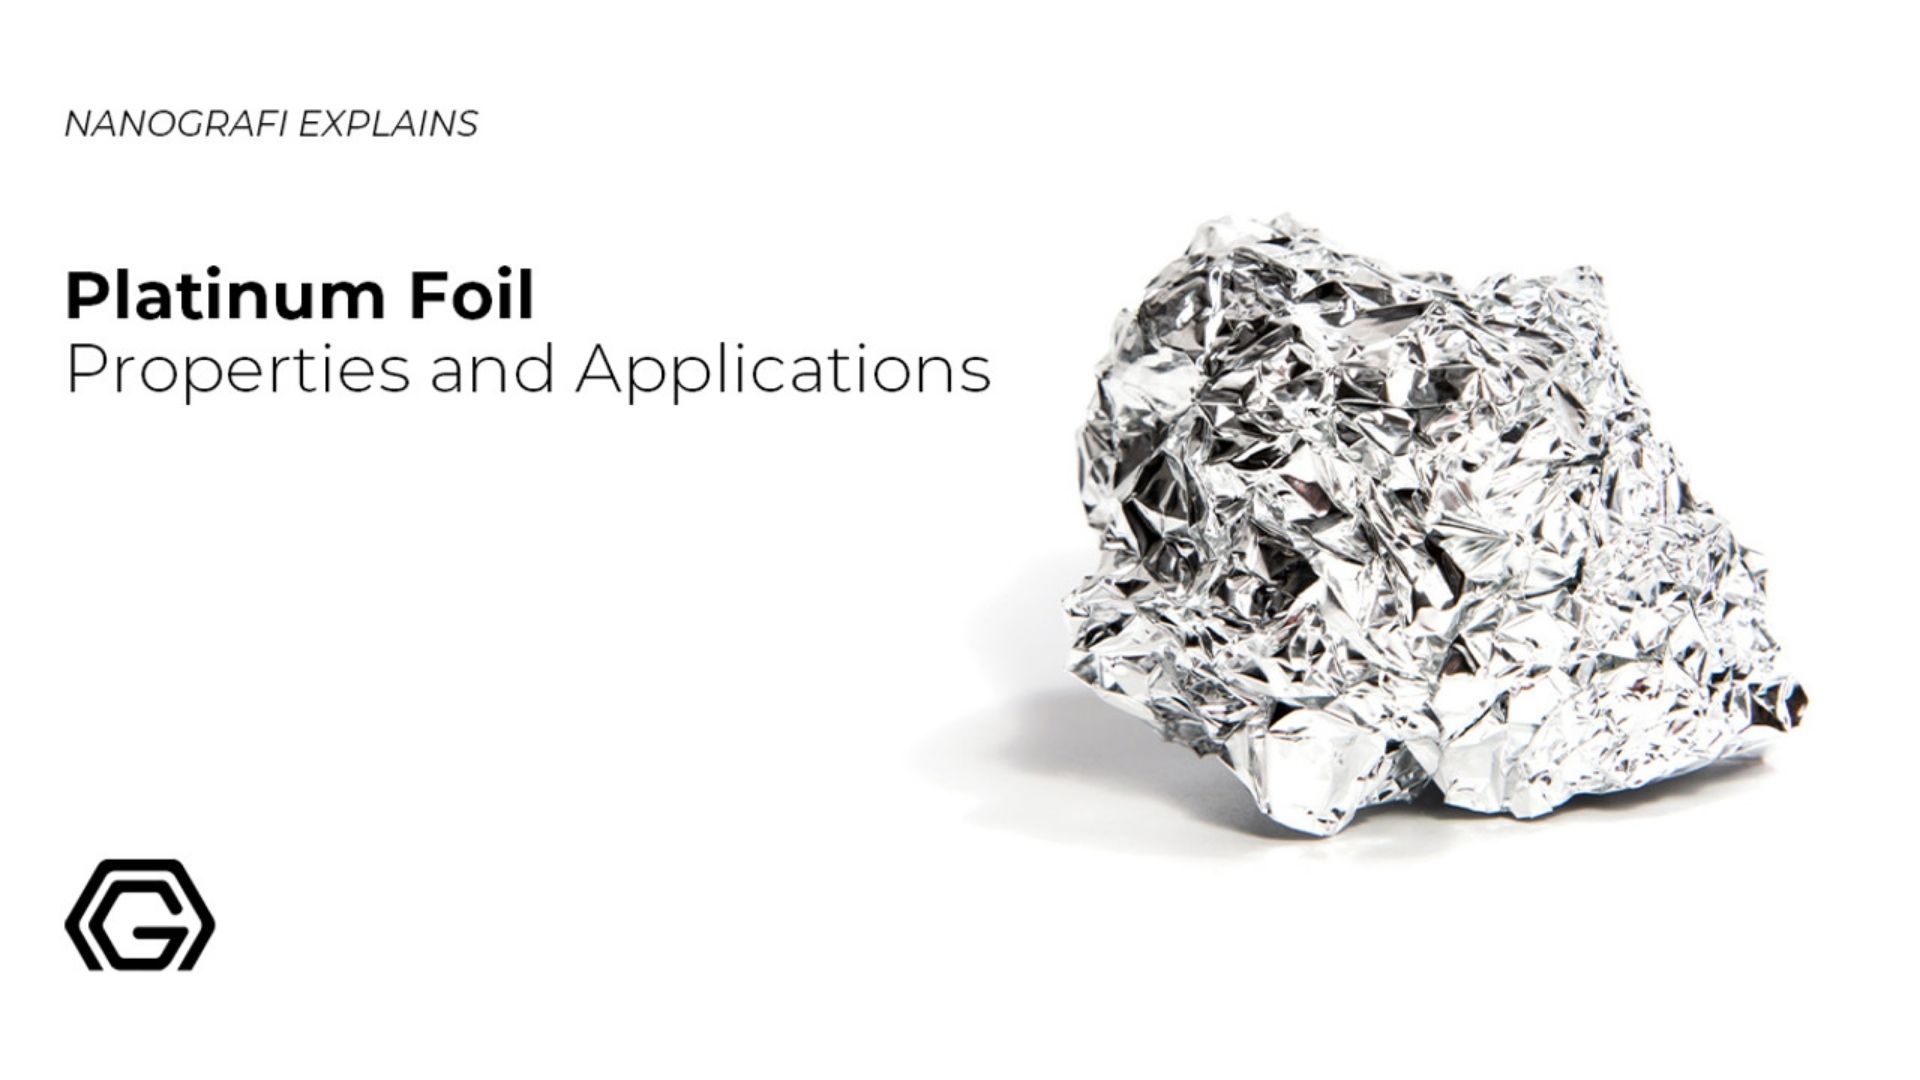 Platinum foil properties and applications